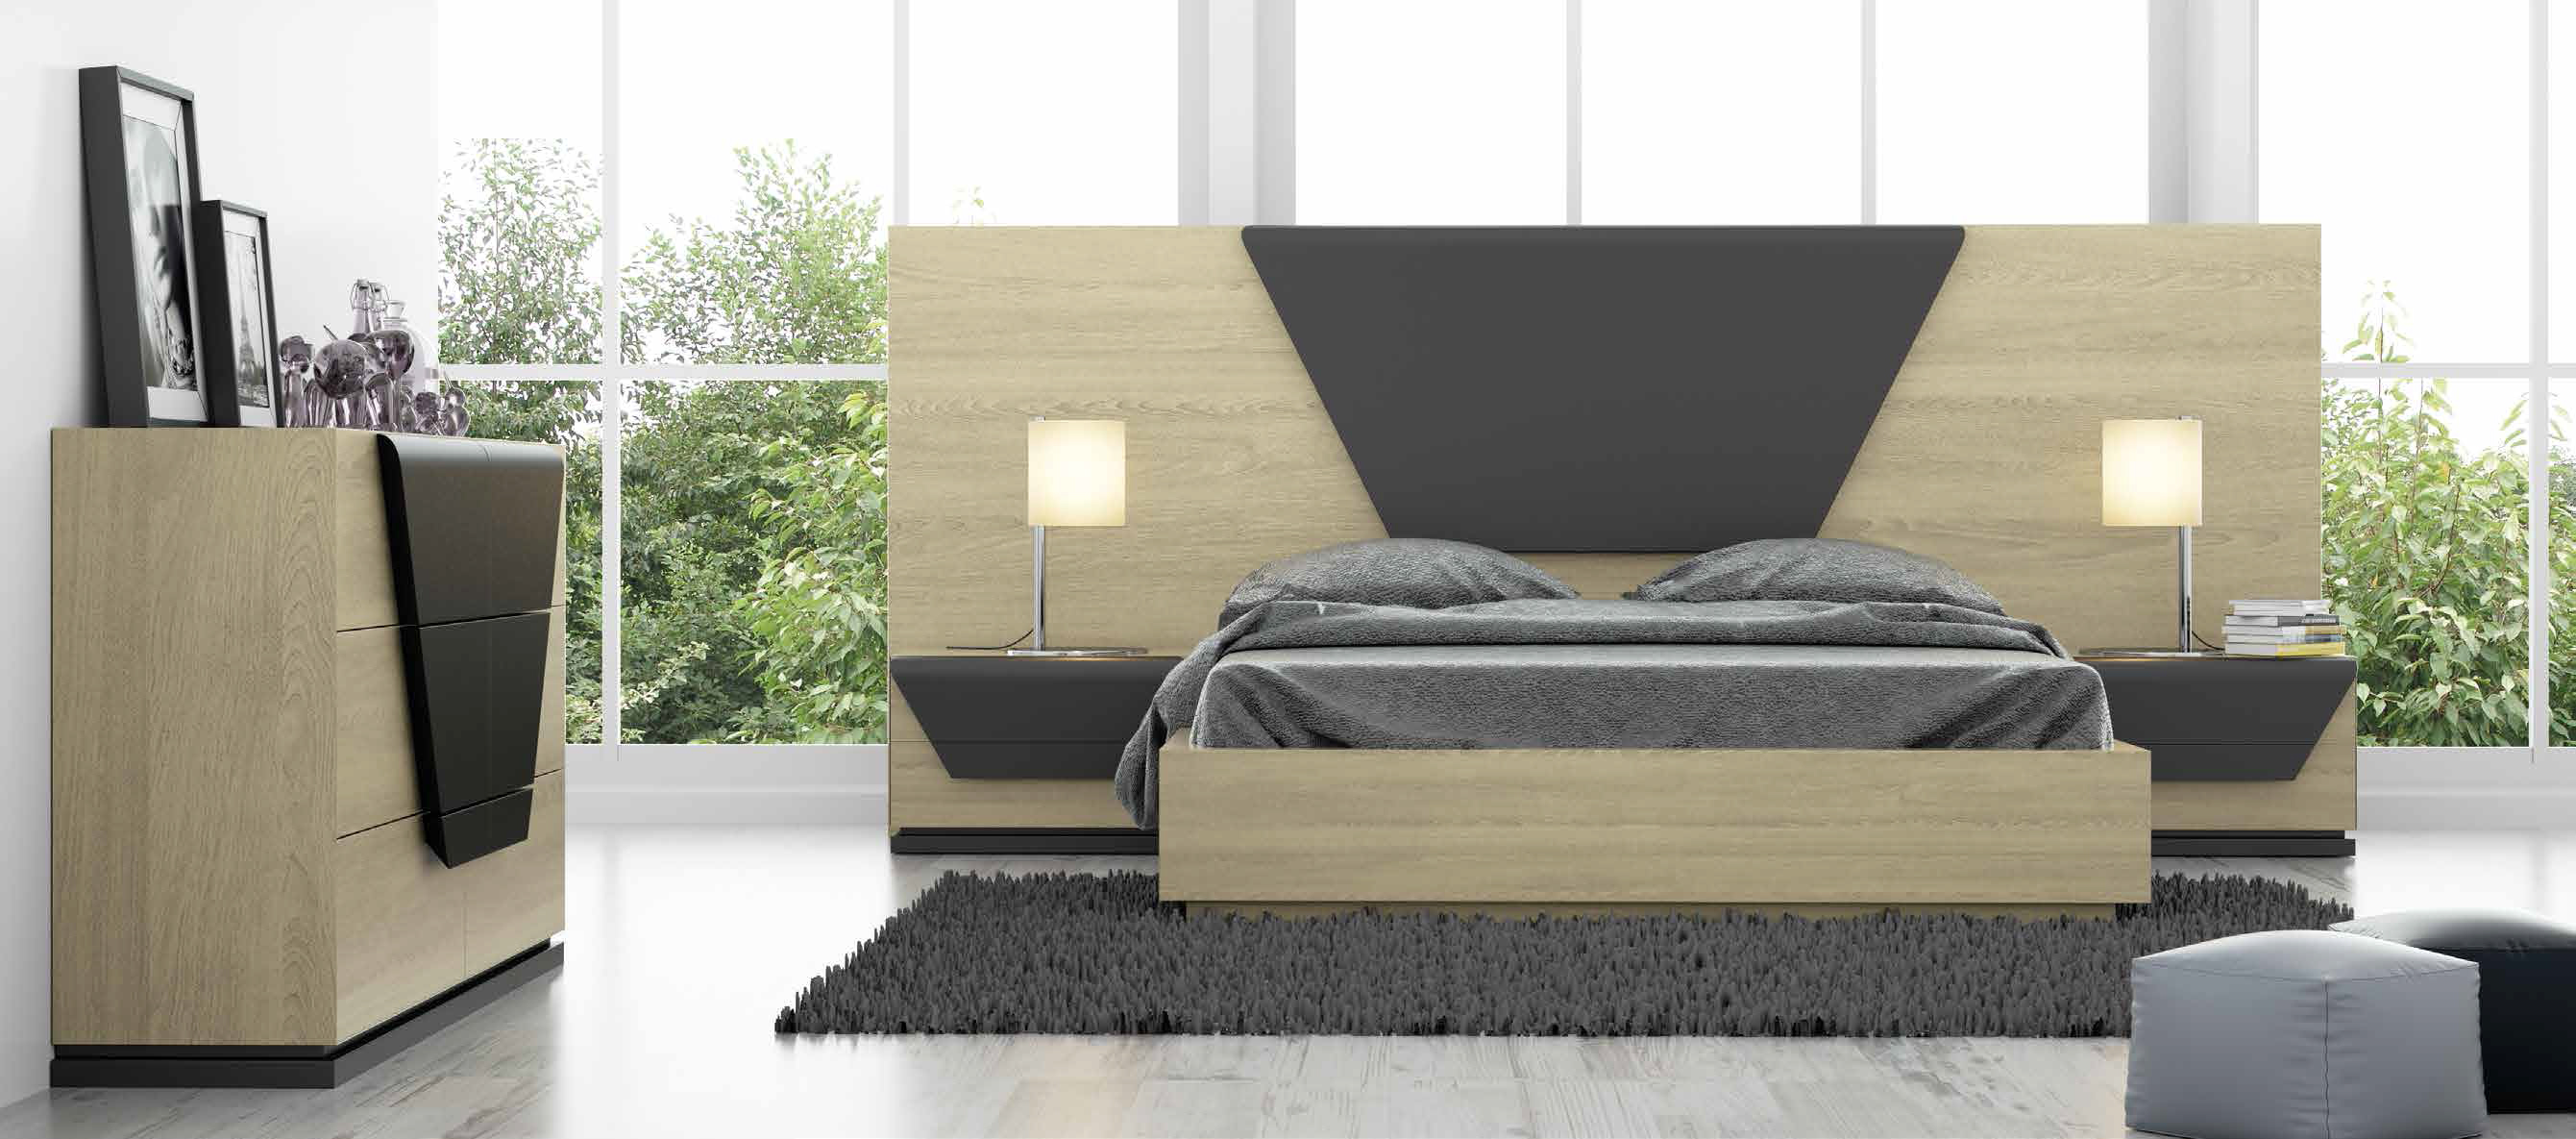 Brands Garcia Sabate, Modern Bedroom Spain DOR 85